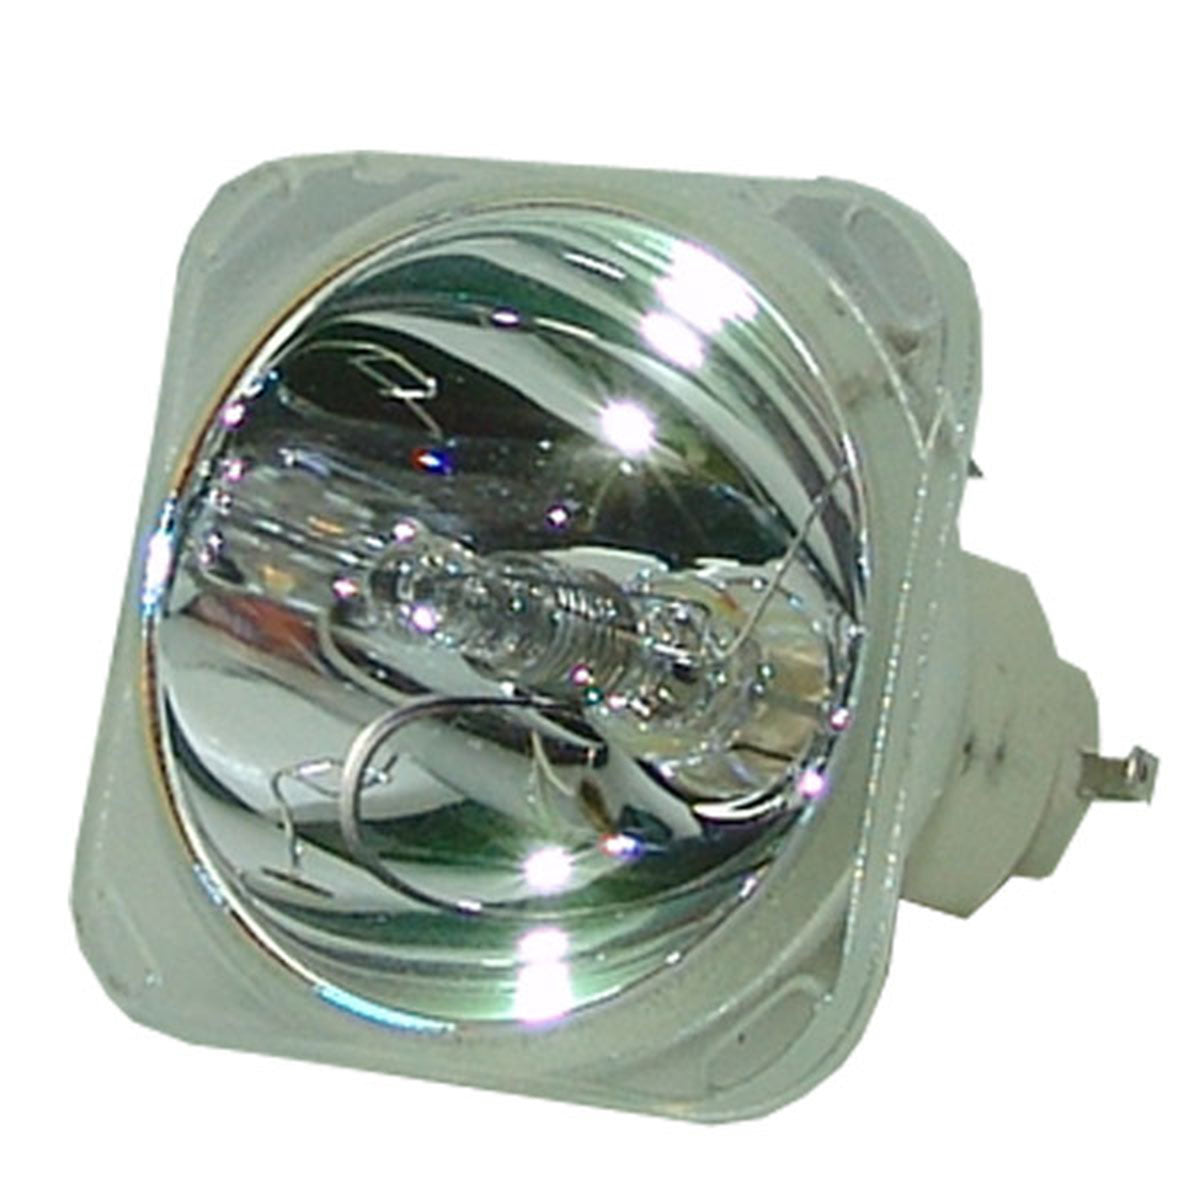 Planar 997-5268-00 Osram Projector Bare Lamp